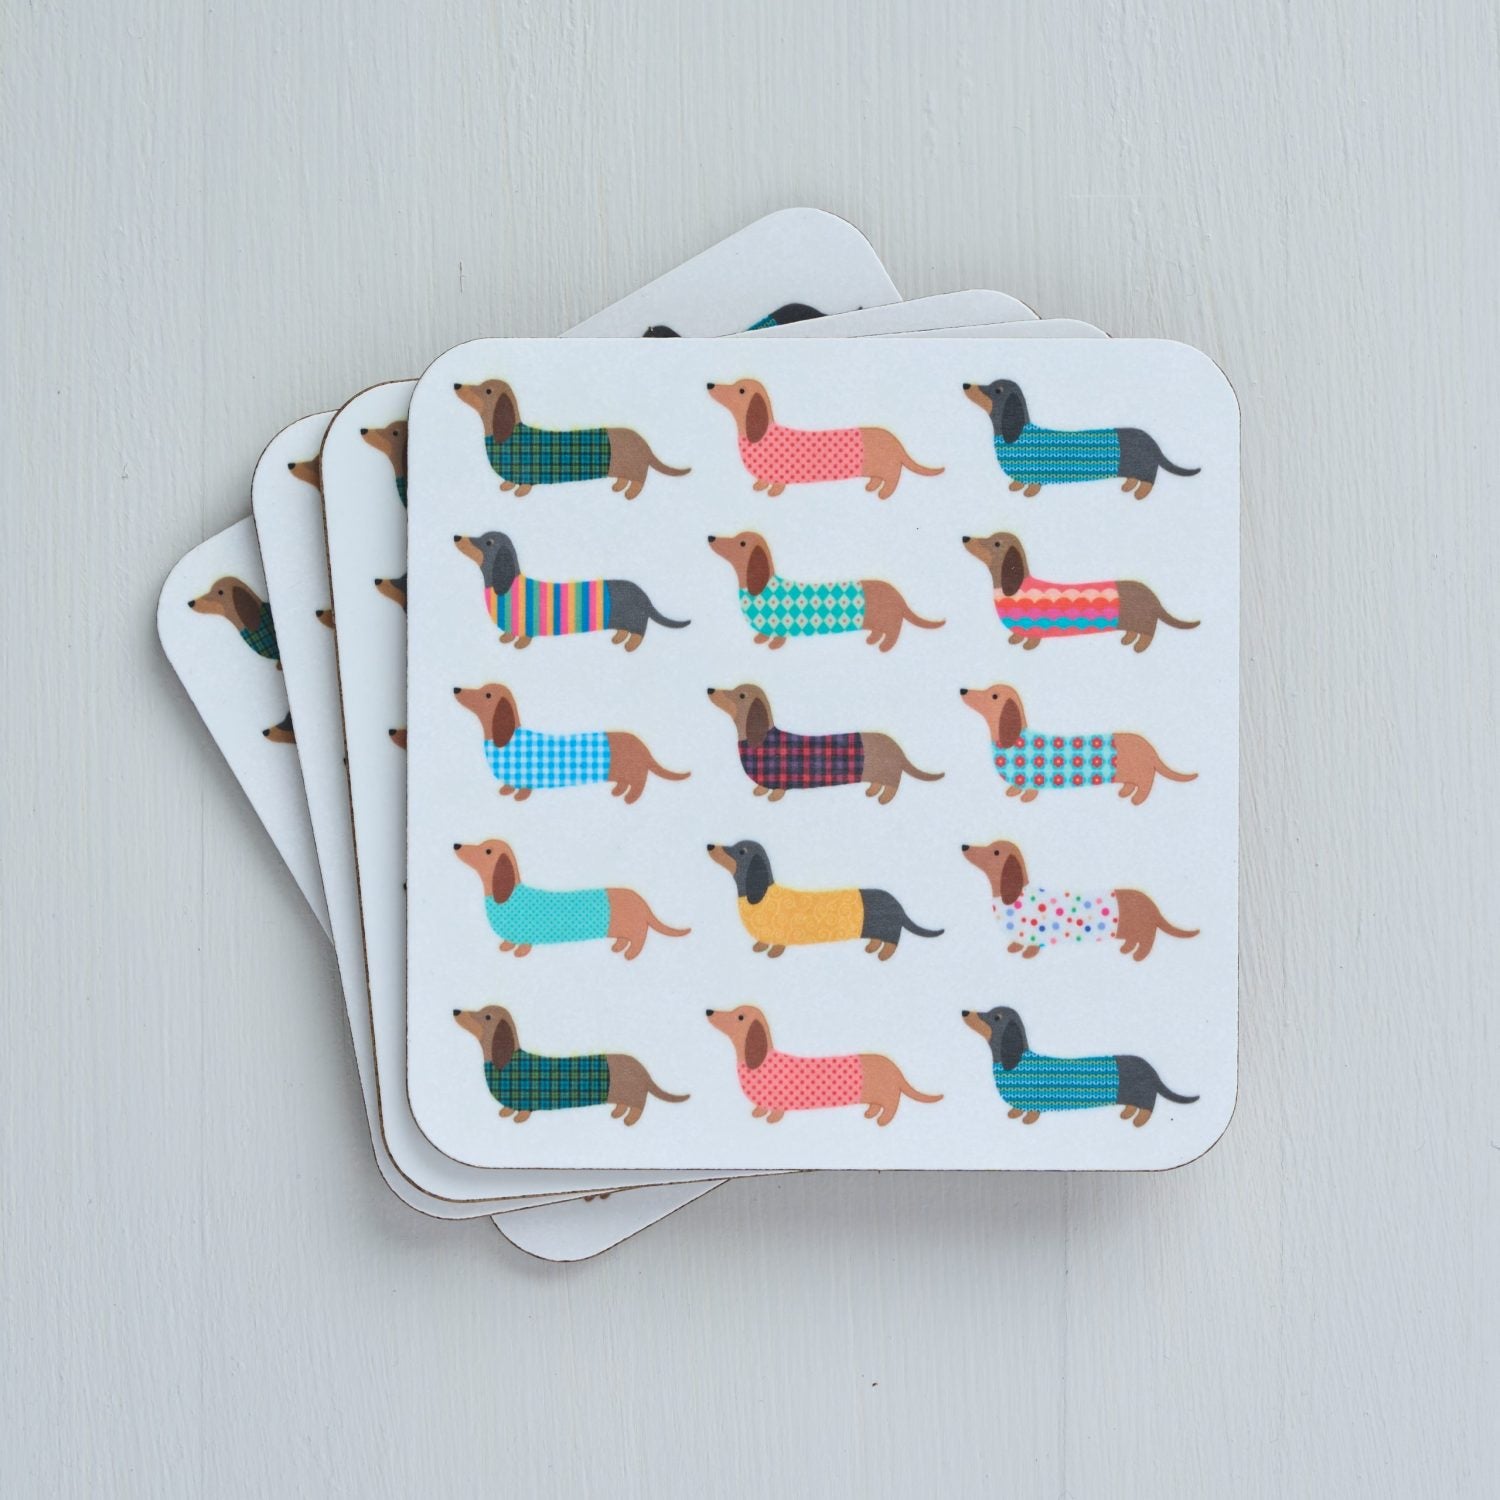 Dashing Dachshund Coasters by Mary Kilvert